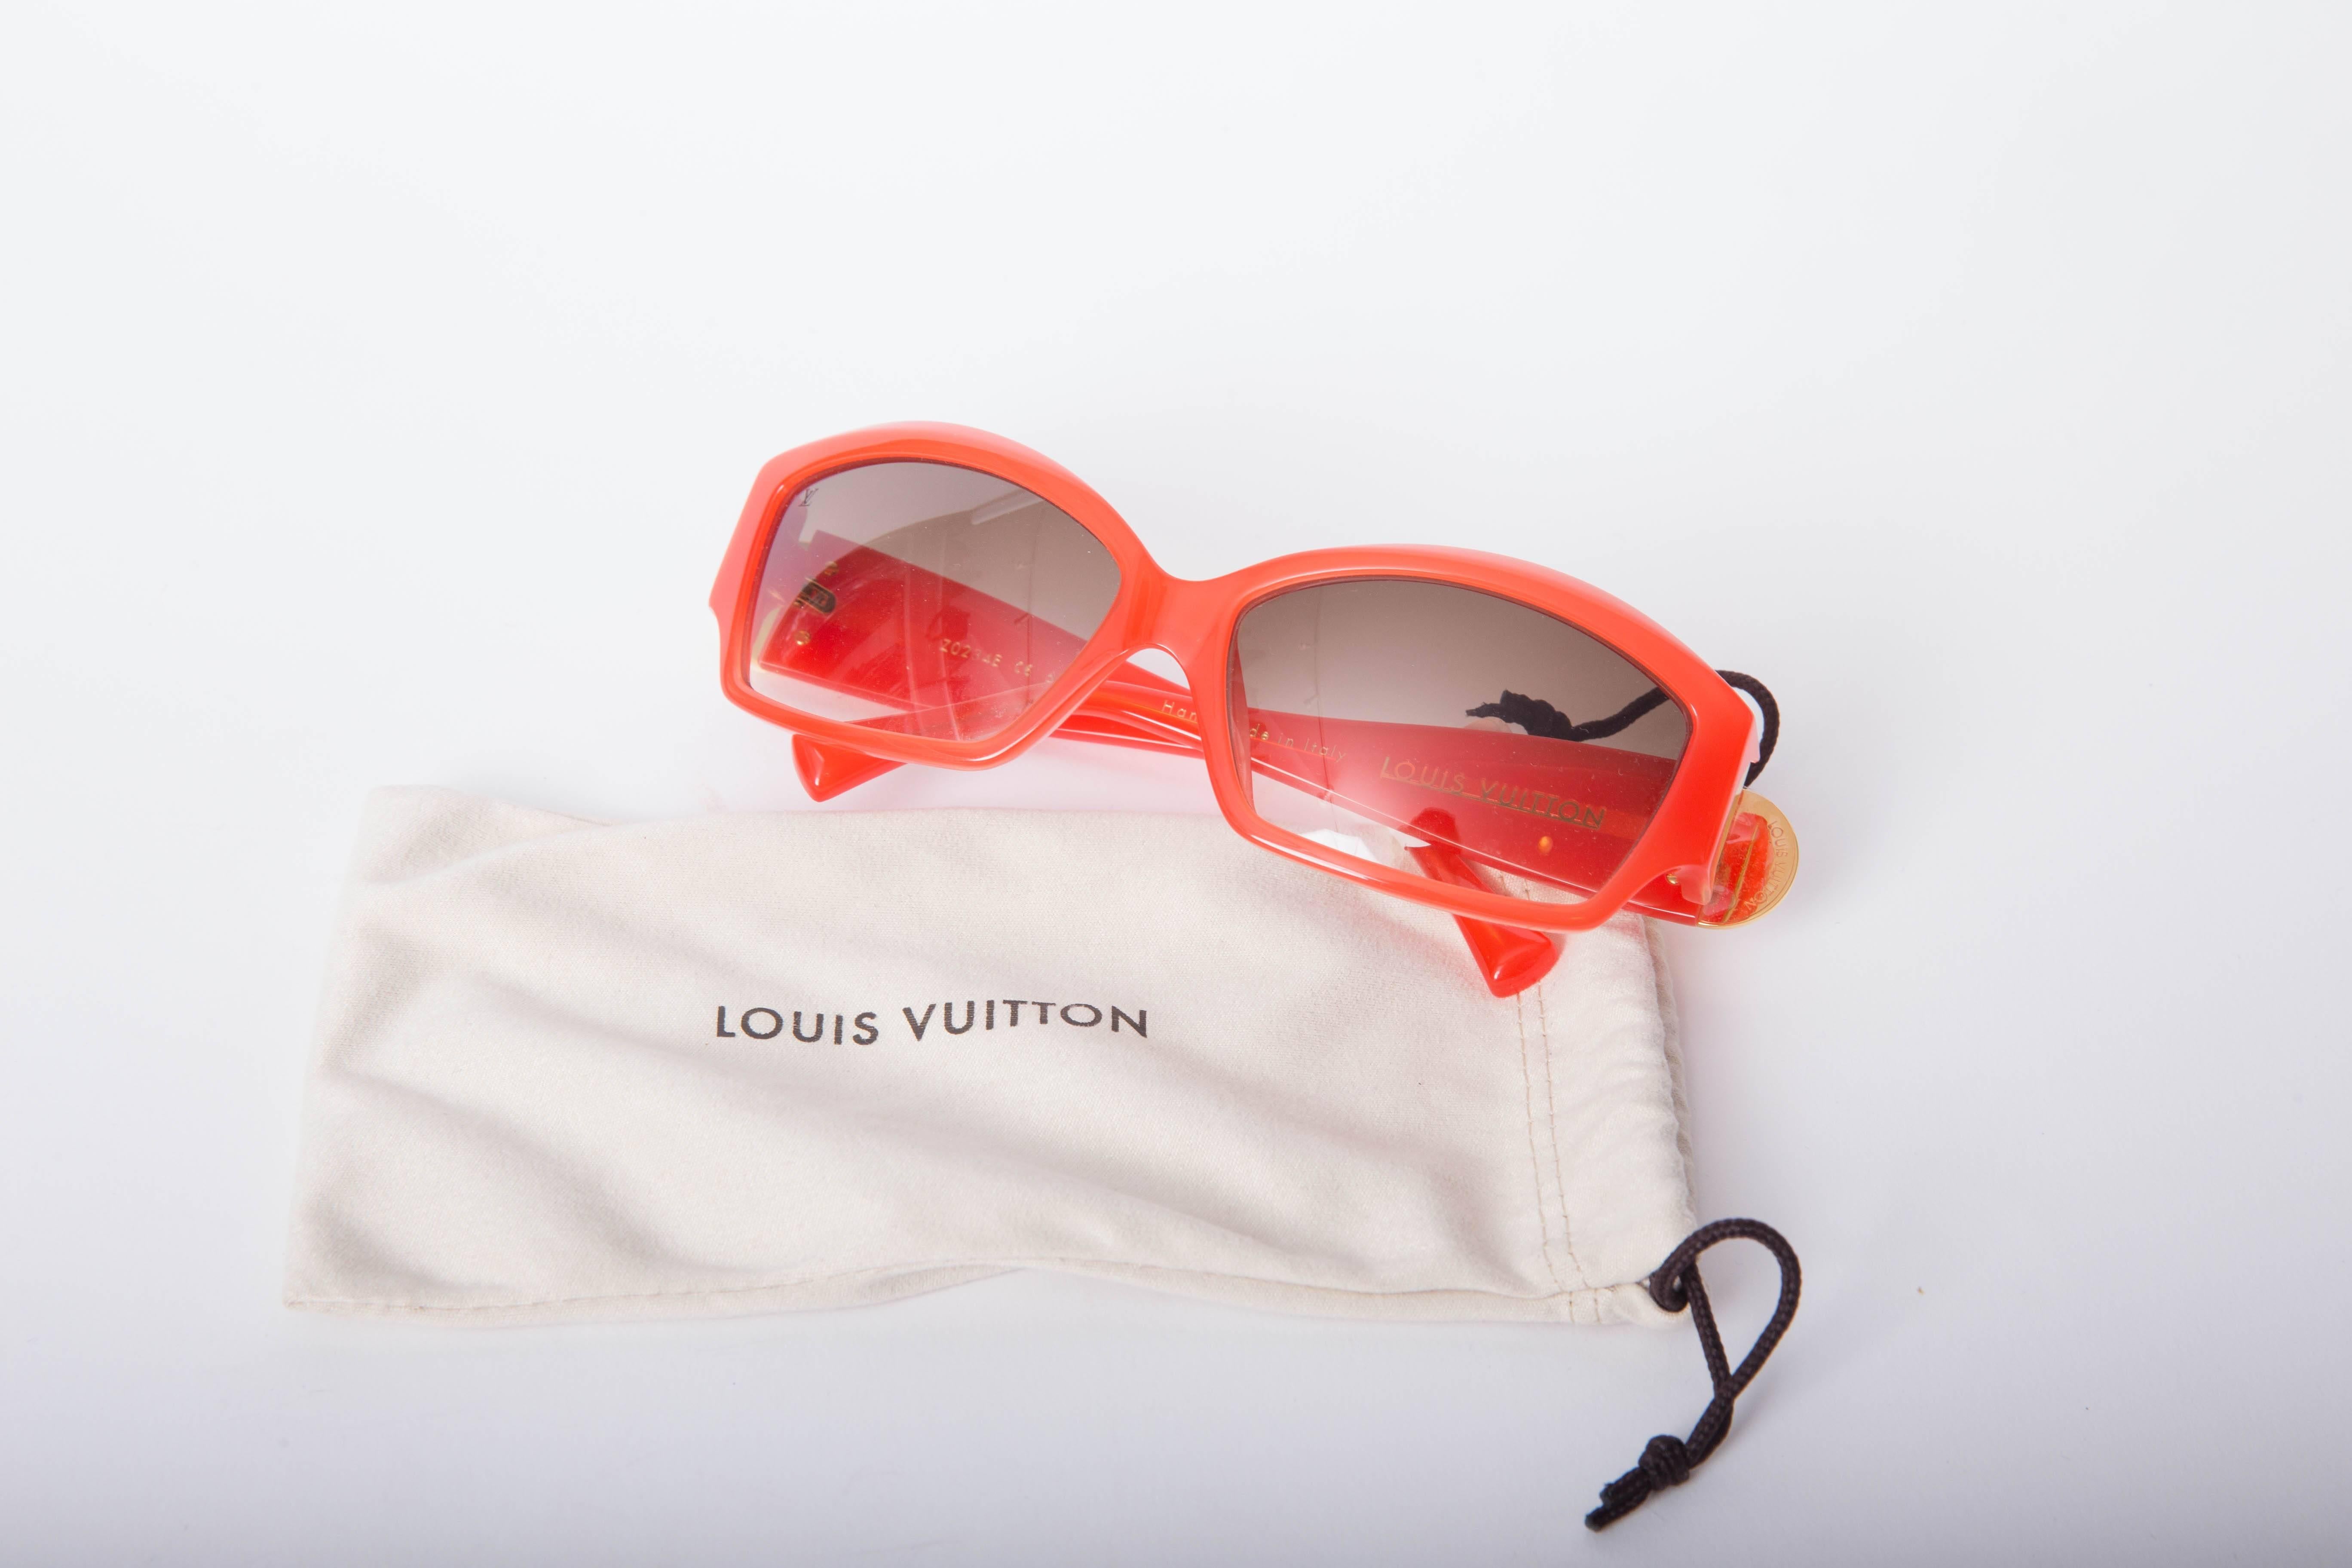 Fabulous Louis Vuitton sunglasses with orange frames.
Perfect condition.
Soft case is included.
Model No Z0234E CE 60 15